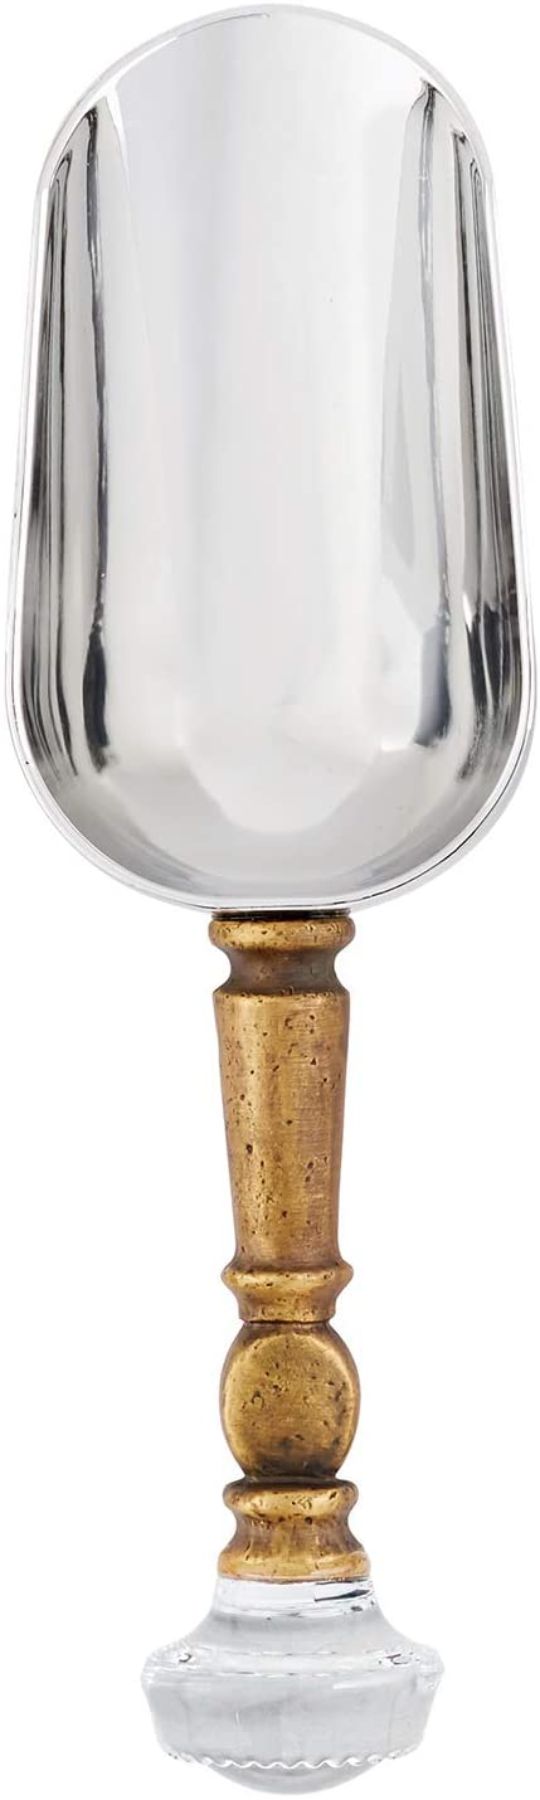 Vintage Inspired Glass Dotted Doorknob Ice Scoop